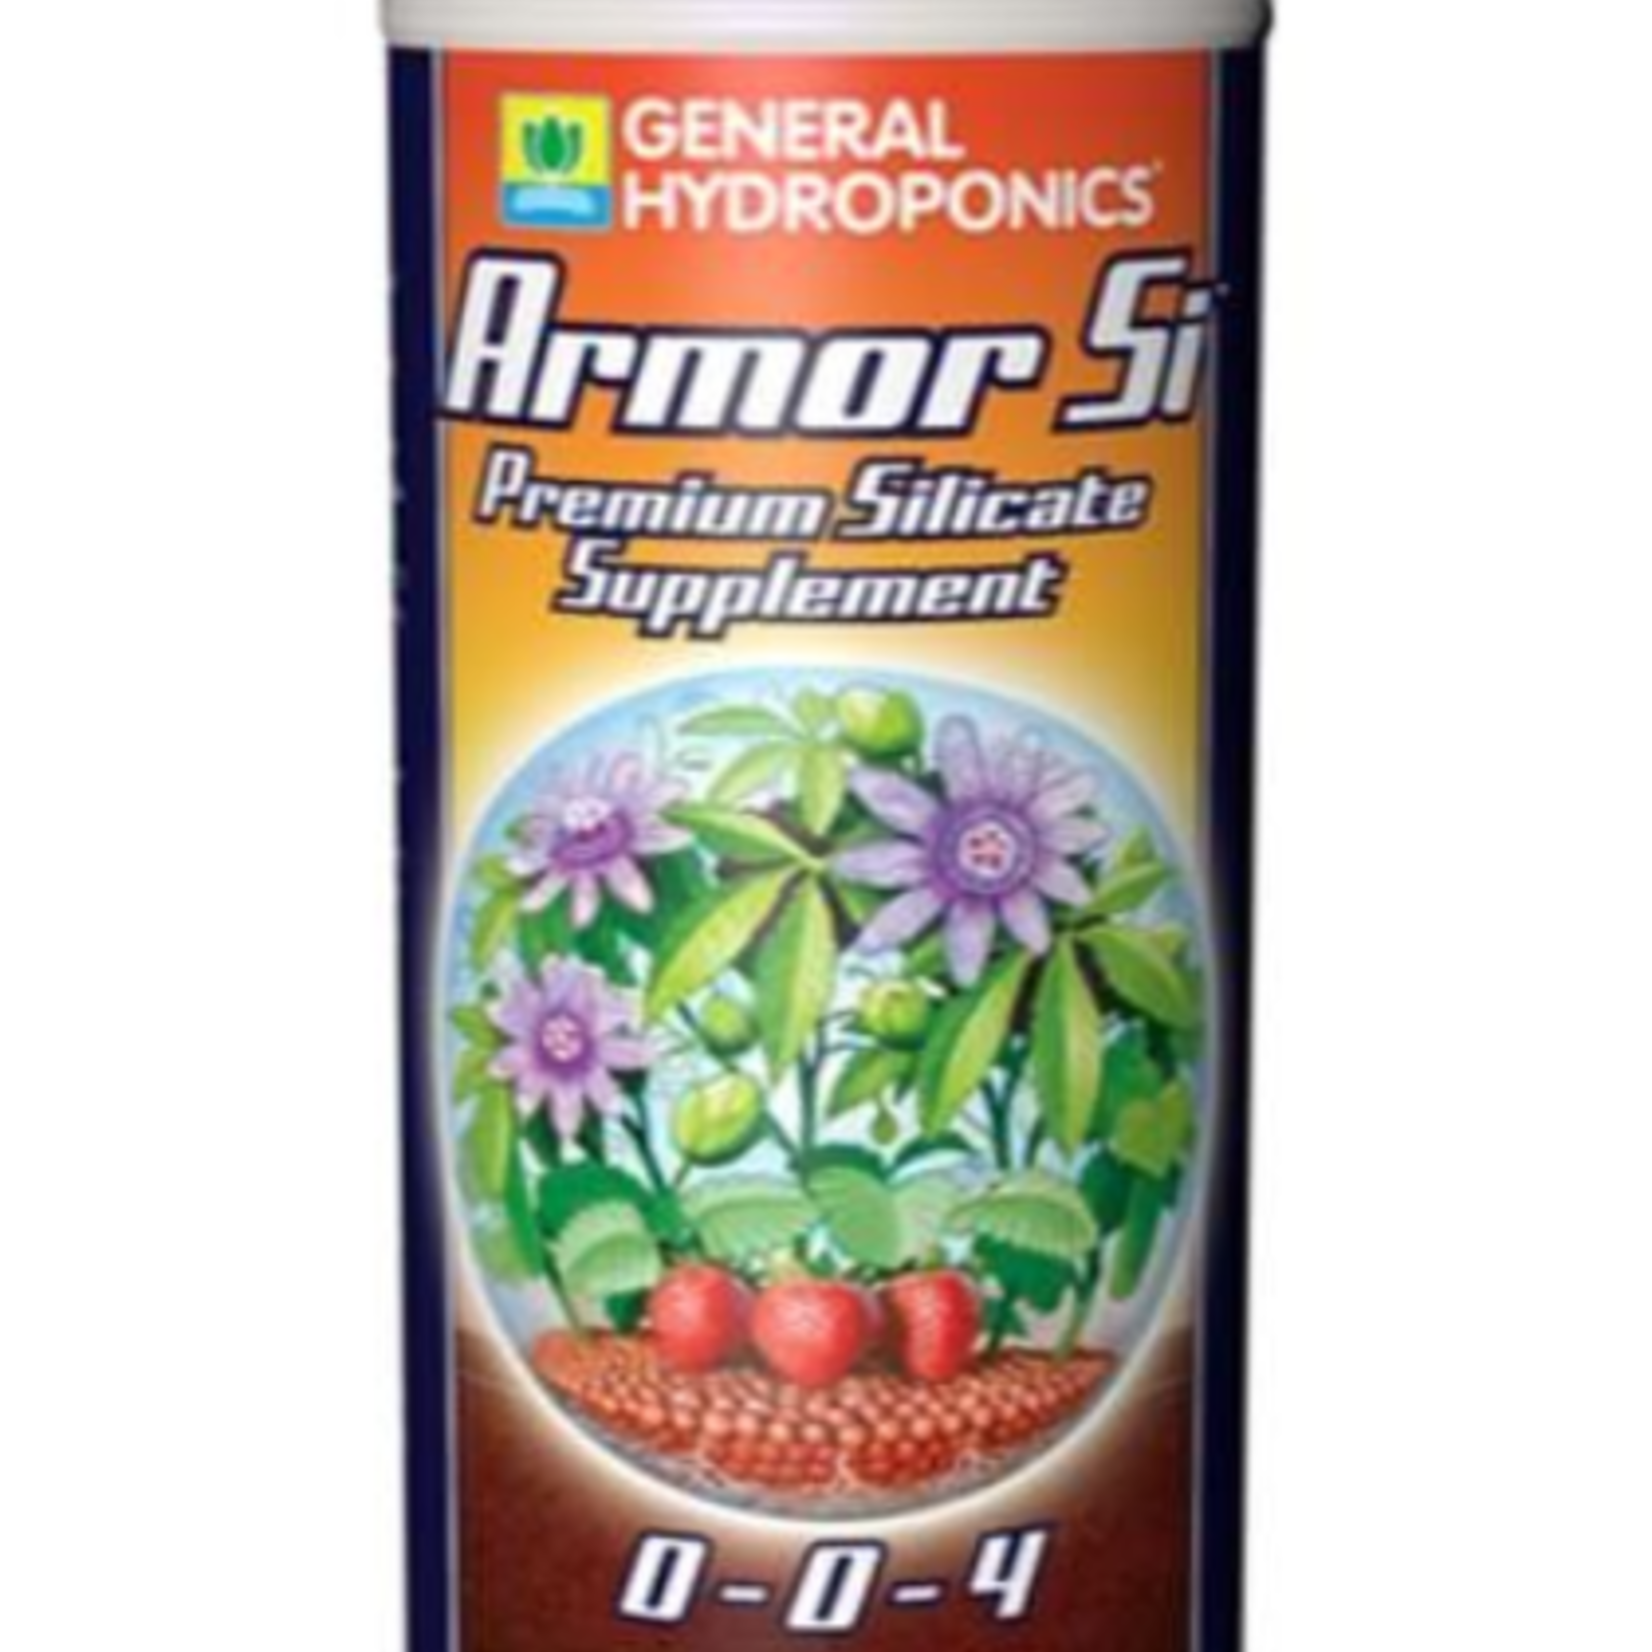 General Hydroponics GH Armor Si Quart